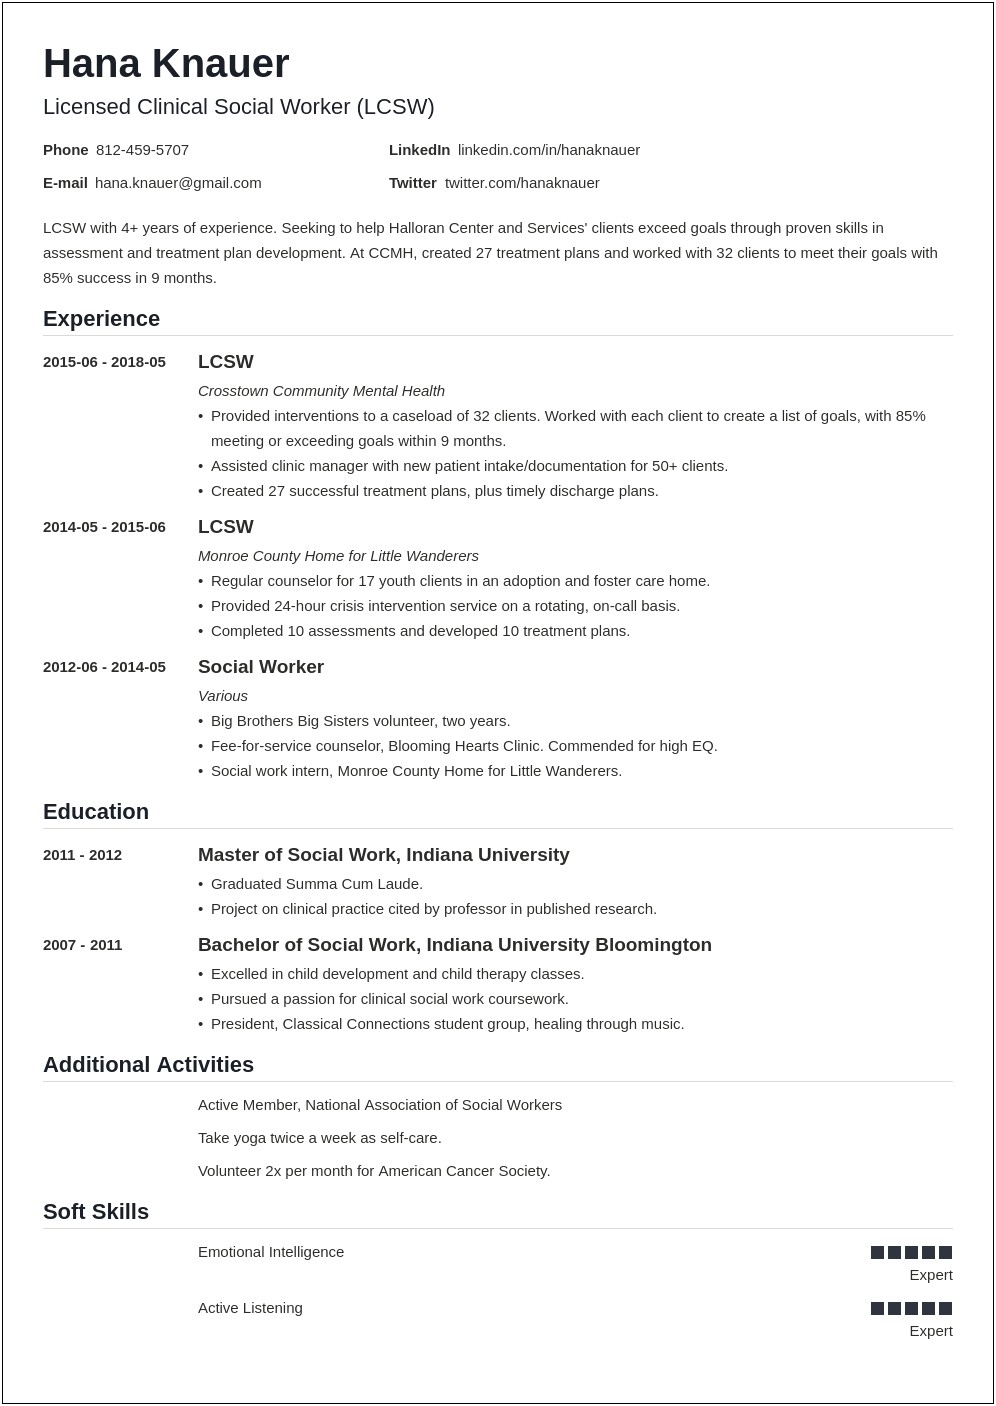 Sample Resume For Medical Social Worker